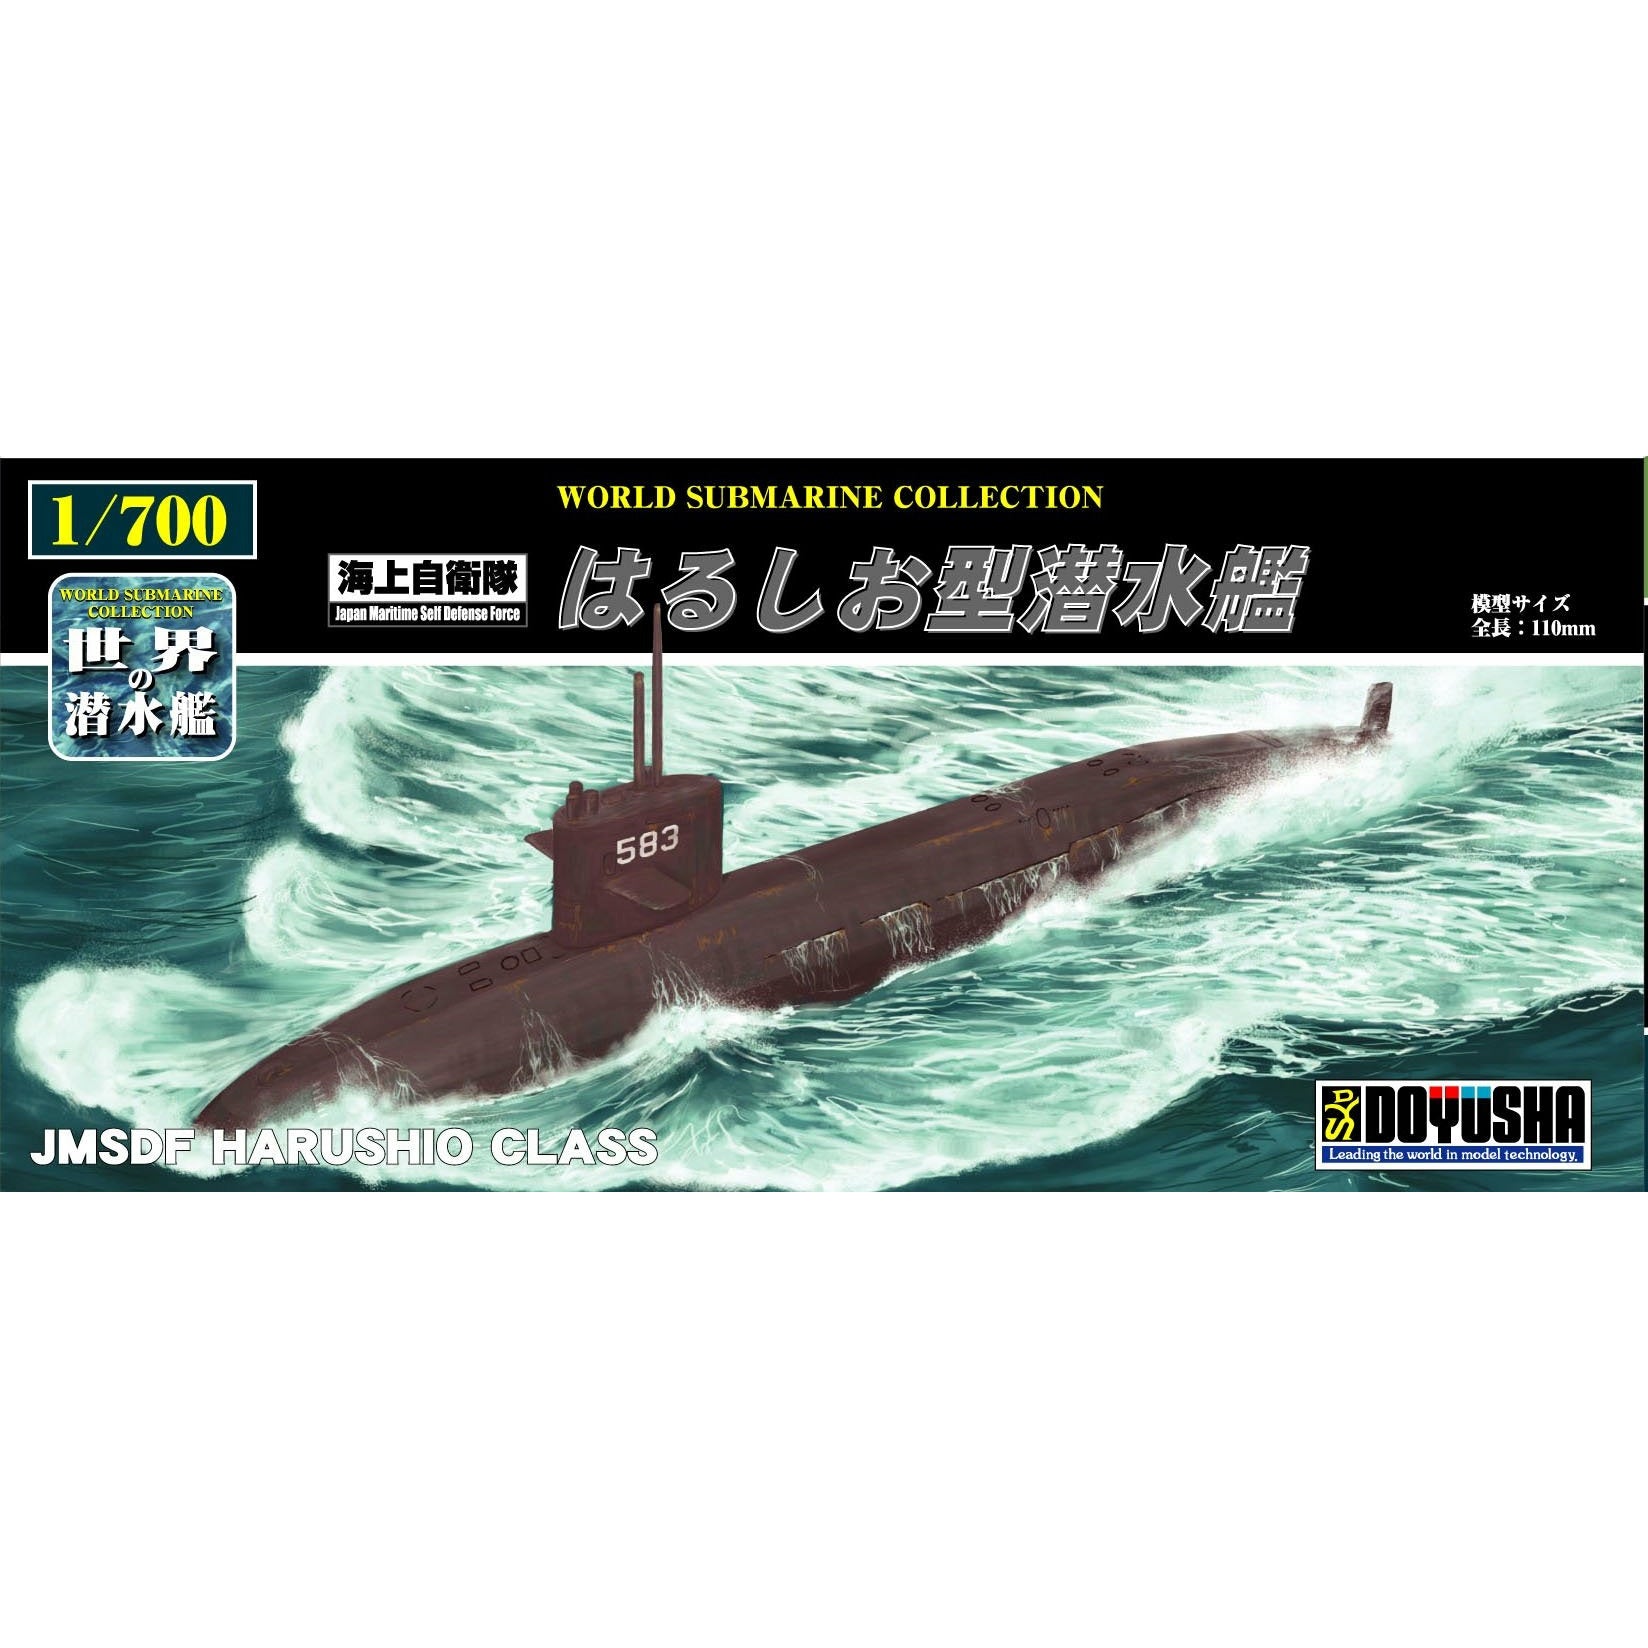 JMSDF Harushio Class Submarine 1/700 Model Ship Kit #1000-18 by Doyusha